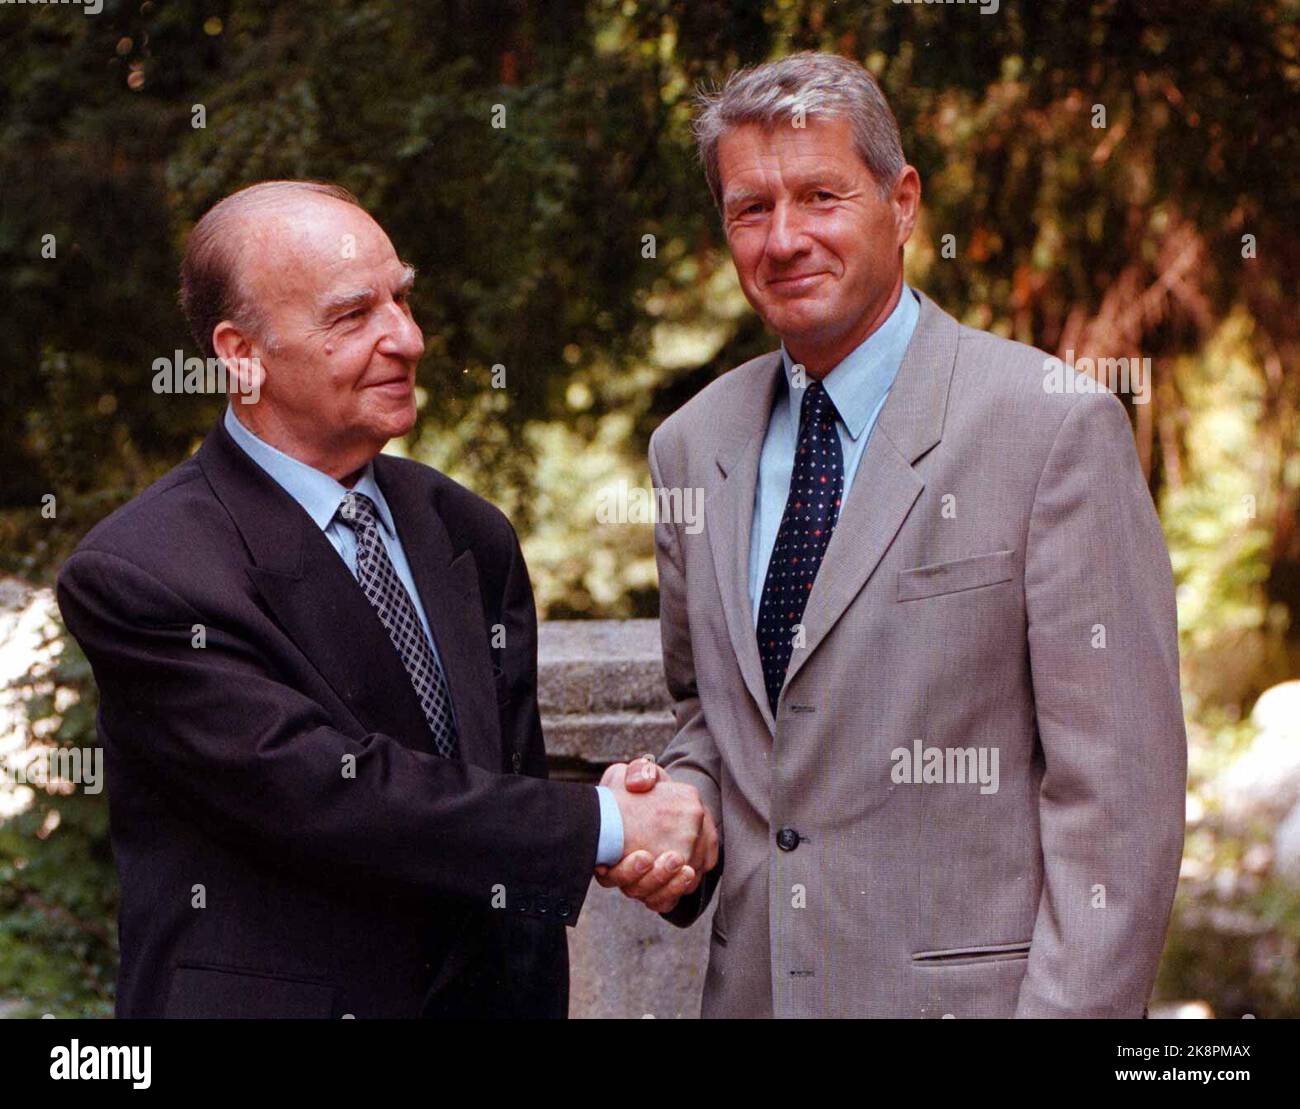 Bosnia 19970812: Il primo ministro Thorbjørn Jagland saluta il presidente Alija Izetbegovic durante la visita in Bosnia. Foto: Helge Hansen NTB / NTB Jugoslavia / Bosnia / riunioni Foto Stock